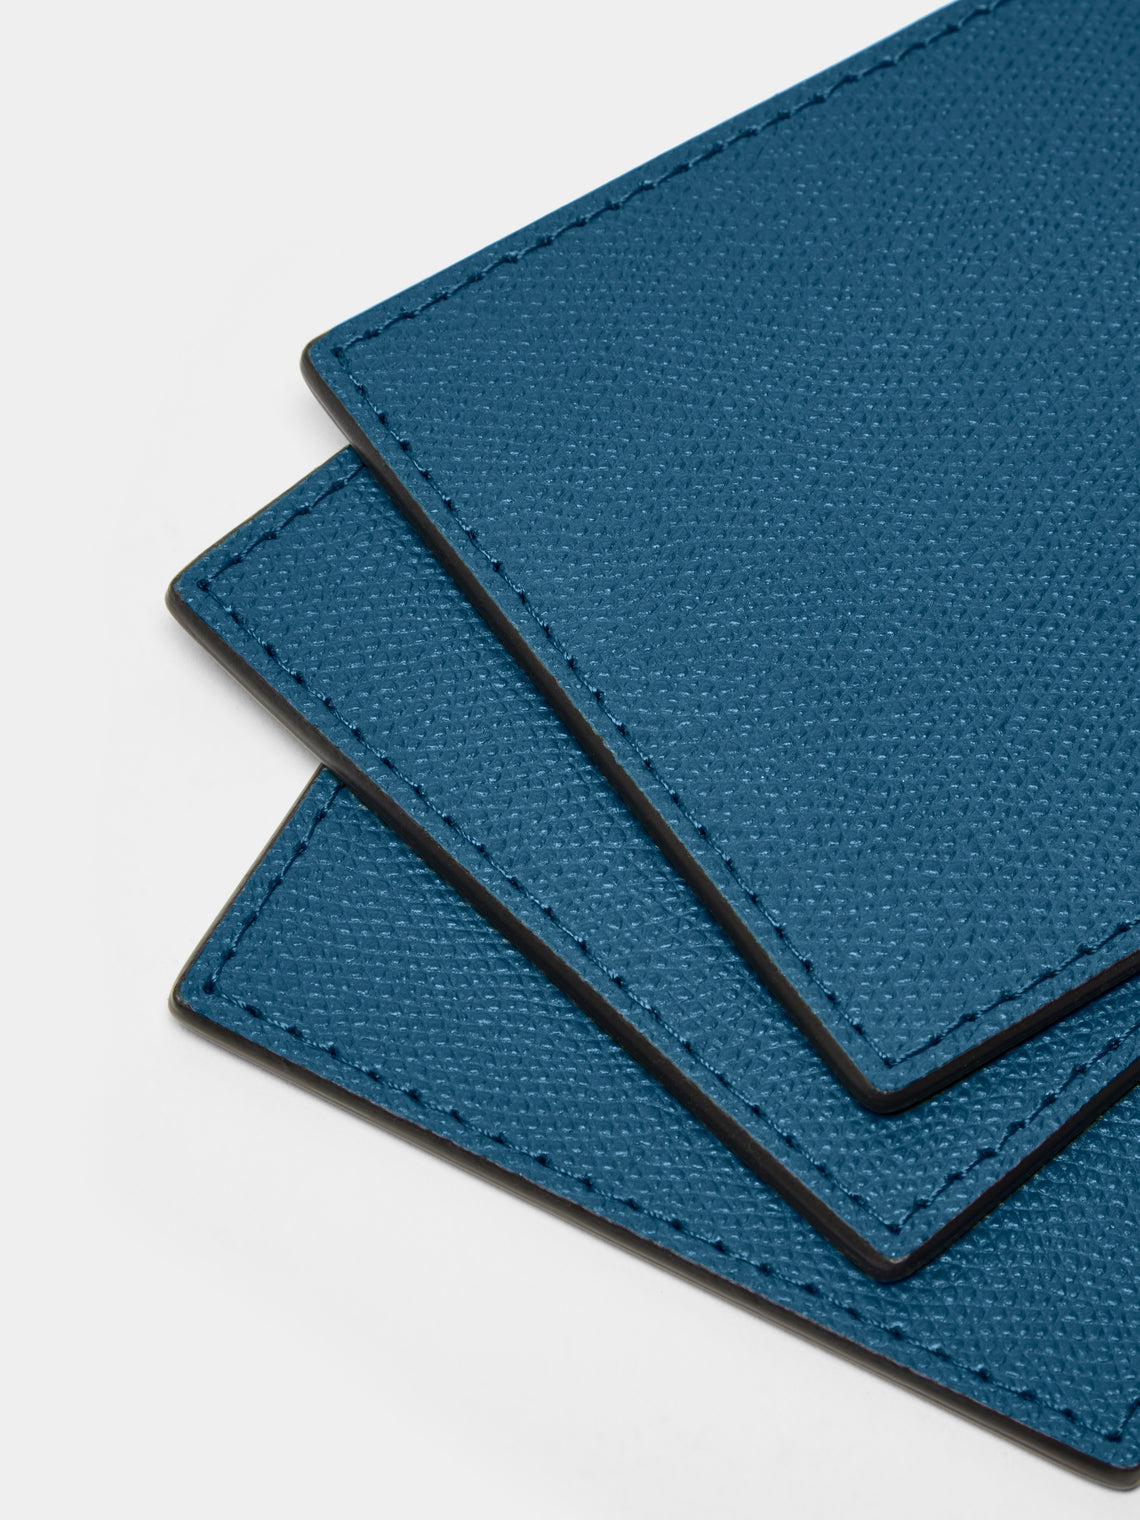 Giobagnara - Tao Leather Square Coasters (Set of 6) - Blue - ABASK